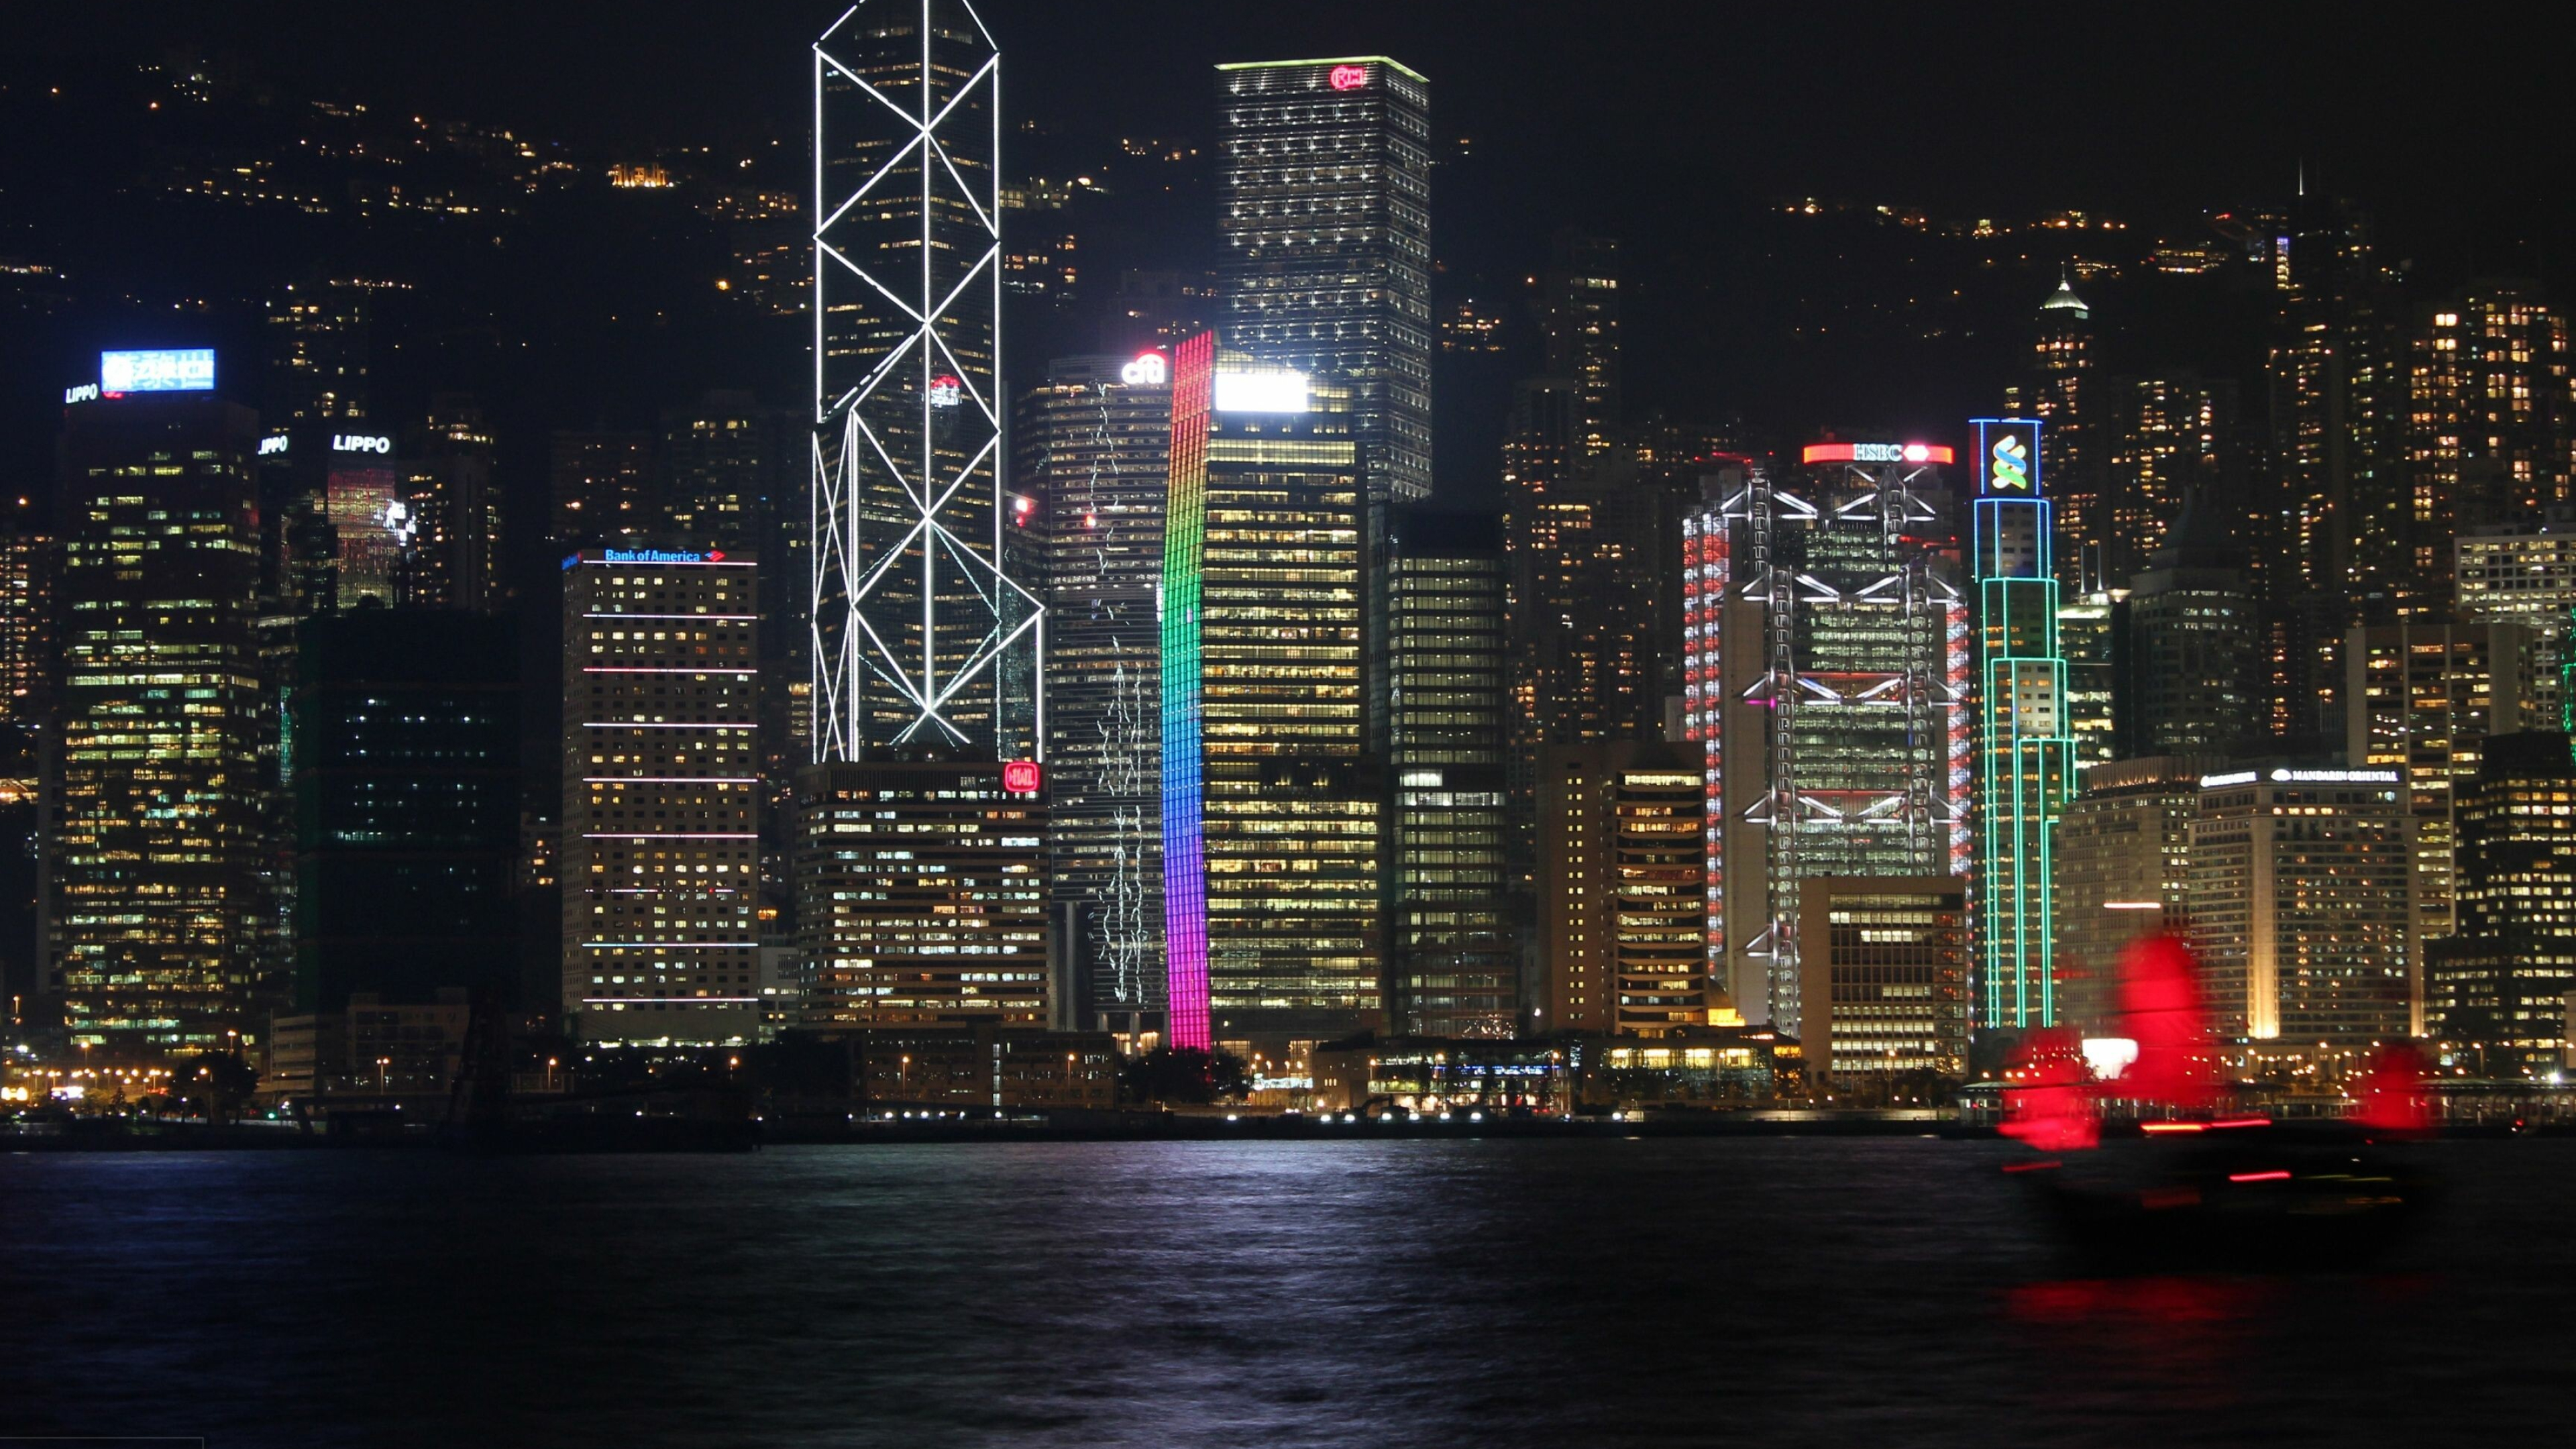 Hong Kong: HK Central, Nightscape, City lights. 3840x2160 4K Wallpaper.